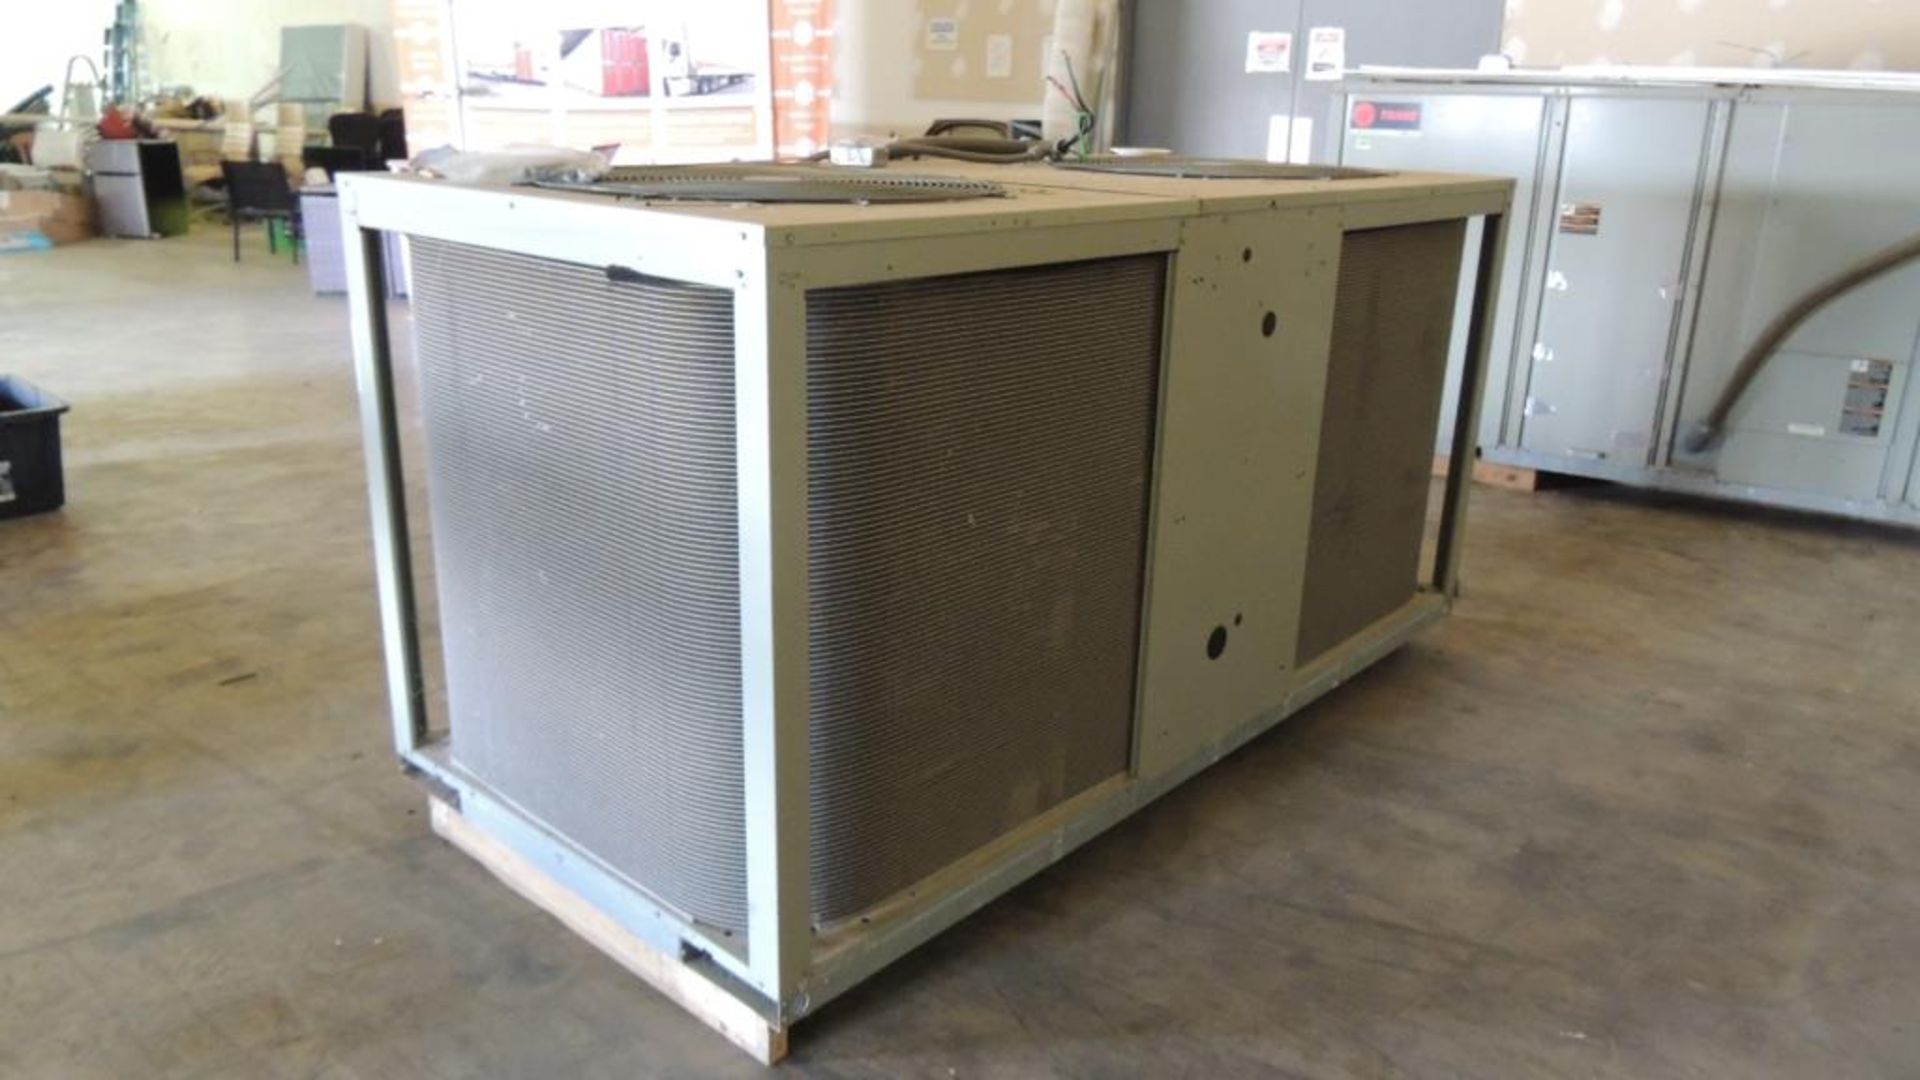 Trane Air Conditioner - Image 4 of 6